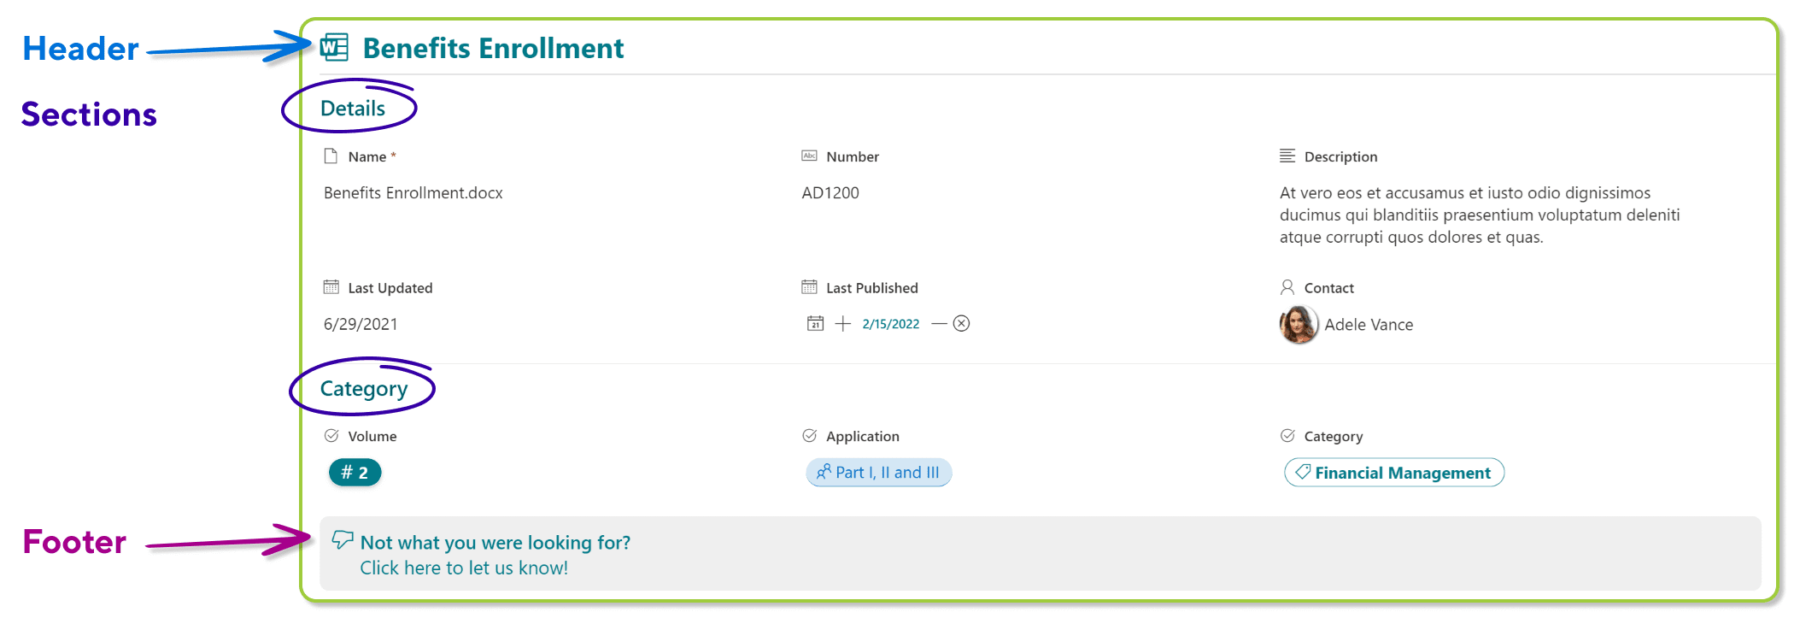 Sharepoint content management - Form Formatting